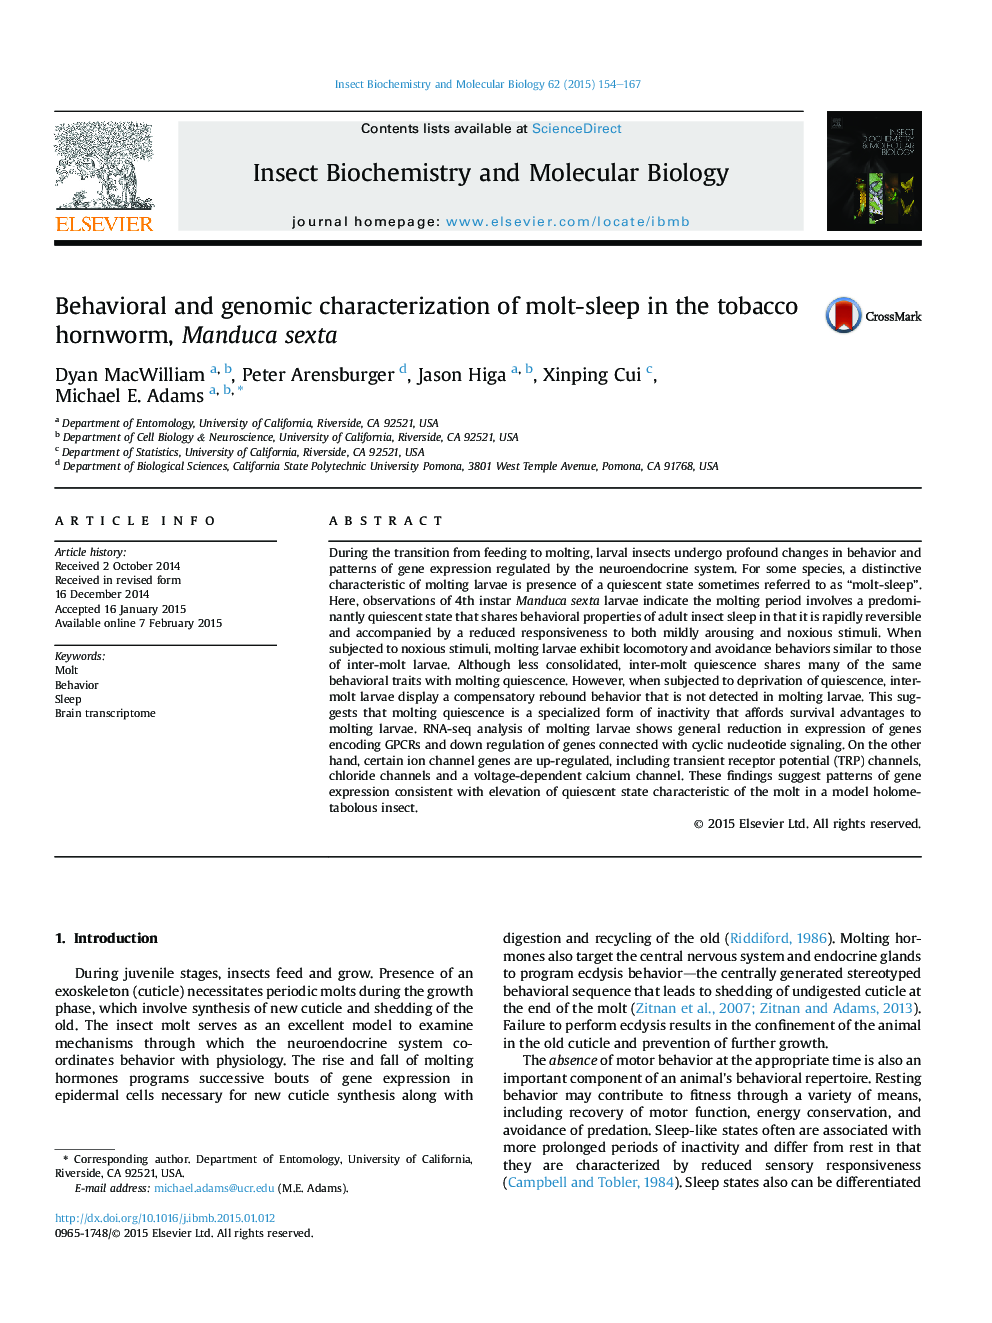 Behavioral and genomic characterization of molt-sleep in the tobacco hornworm, Manduca sexta